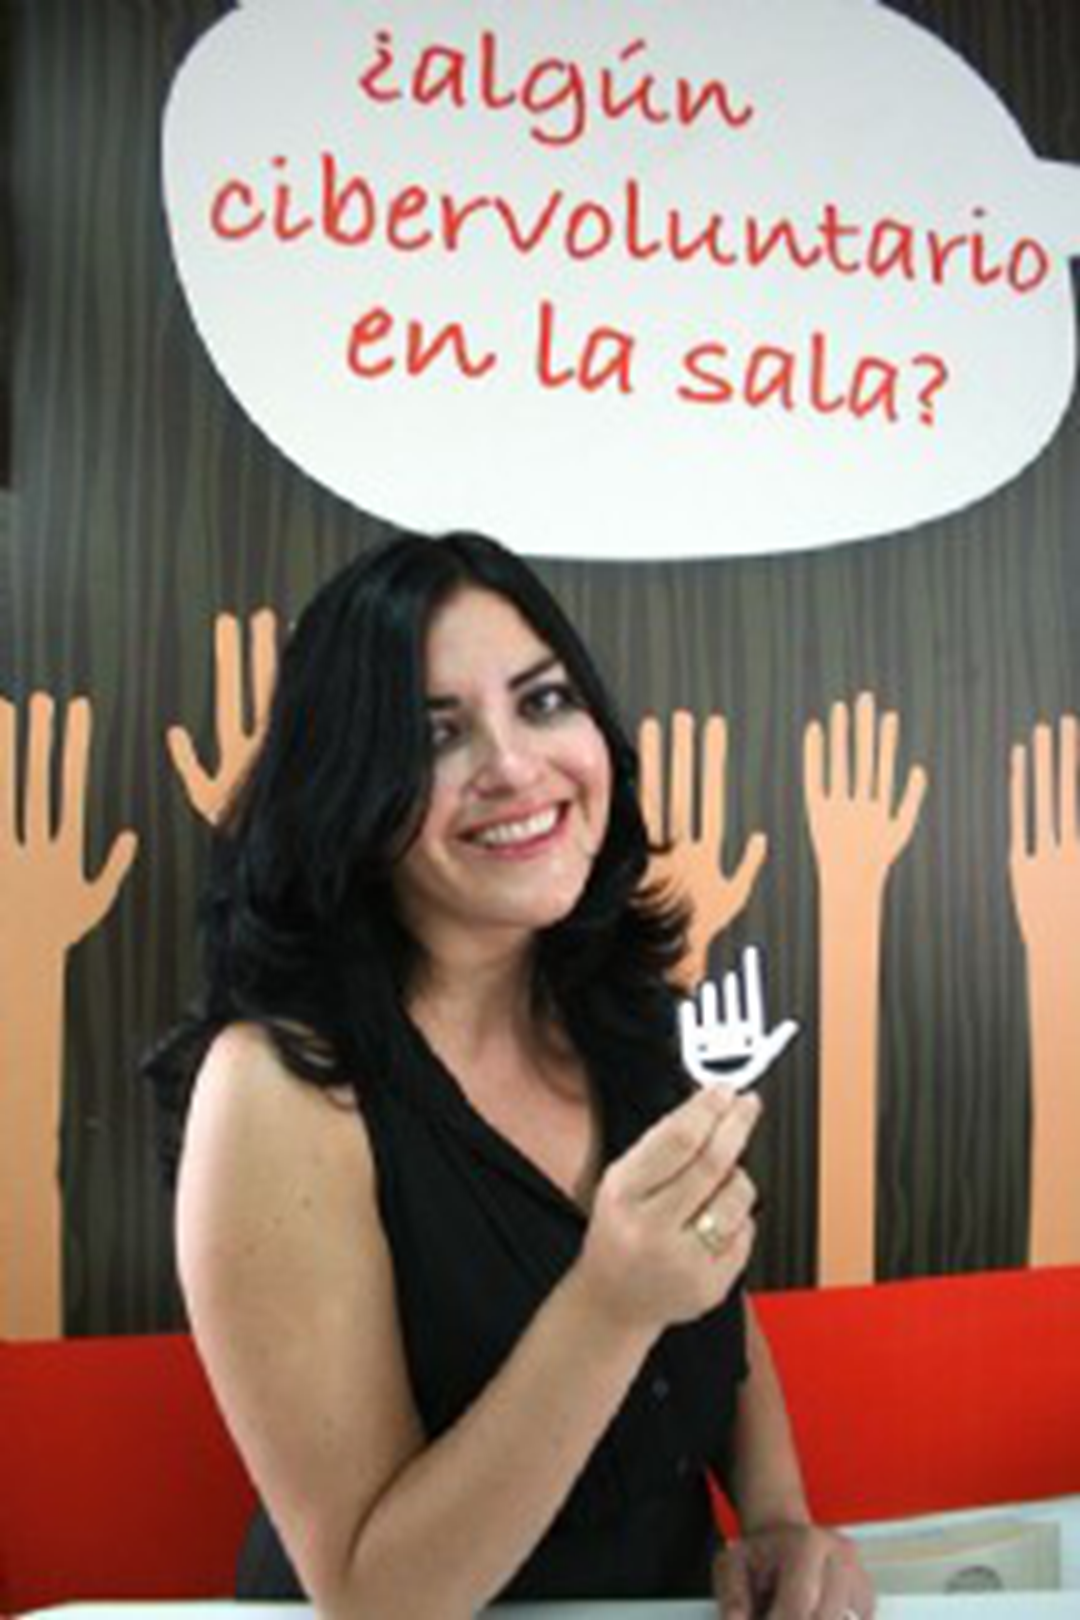 Yolanda Rueda: Founder of Cibervoluntarios Foundation